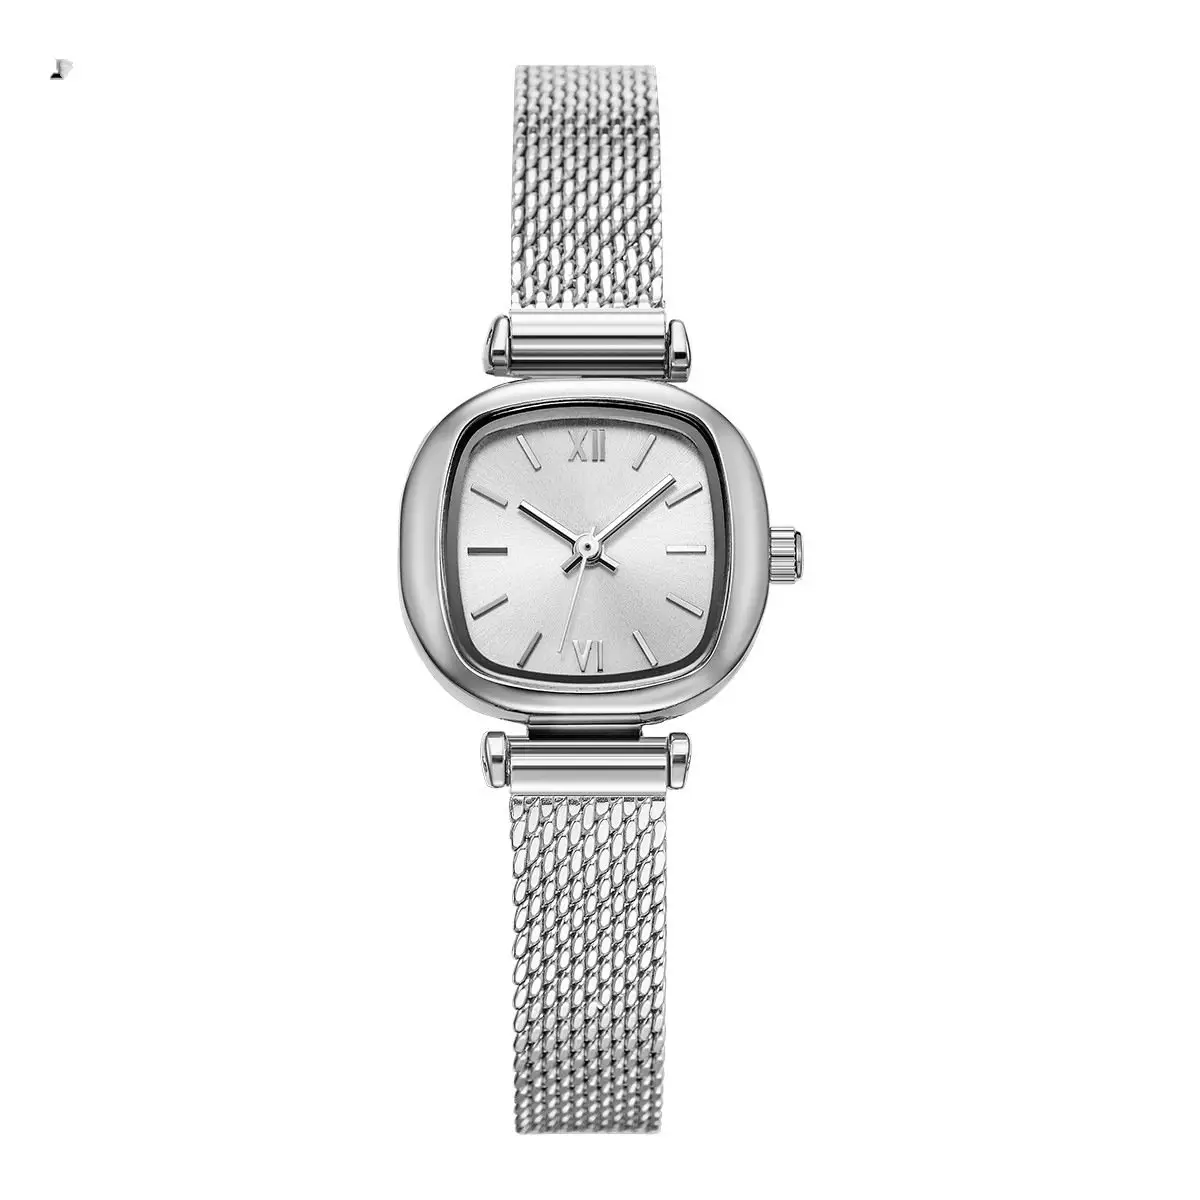 light luxury compact women's watch rose gold retro fashion design square women's watch